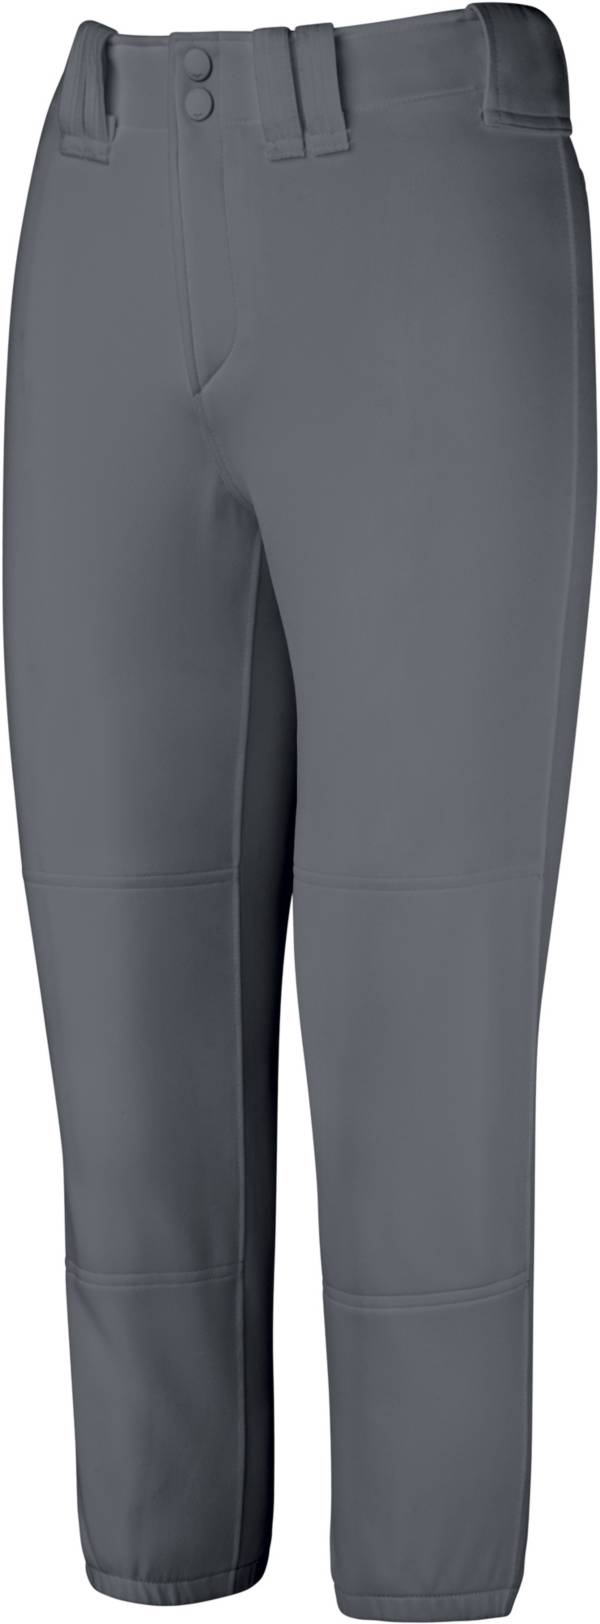 Mizuno Girls' Belted Softball Pants product image